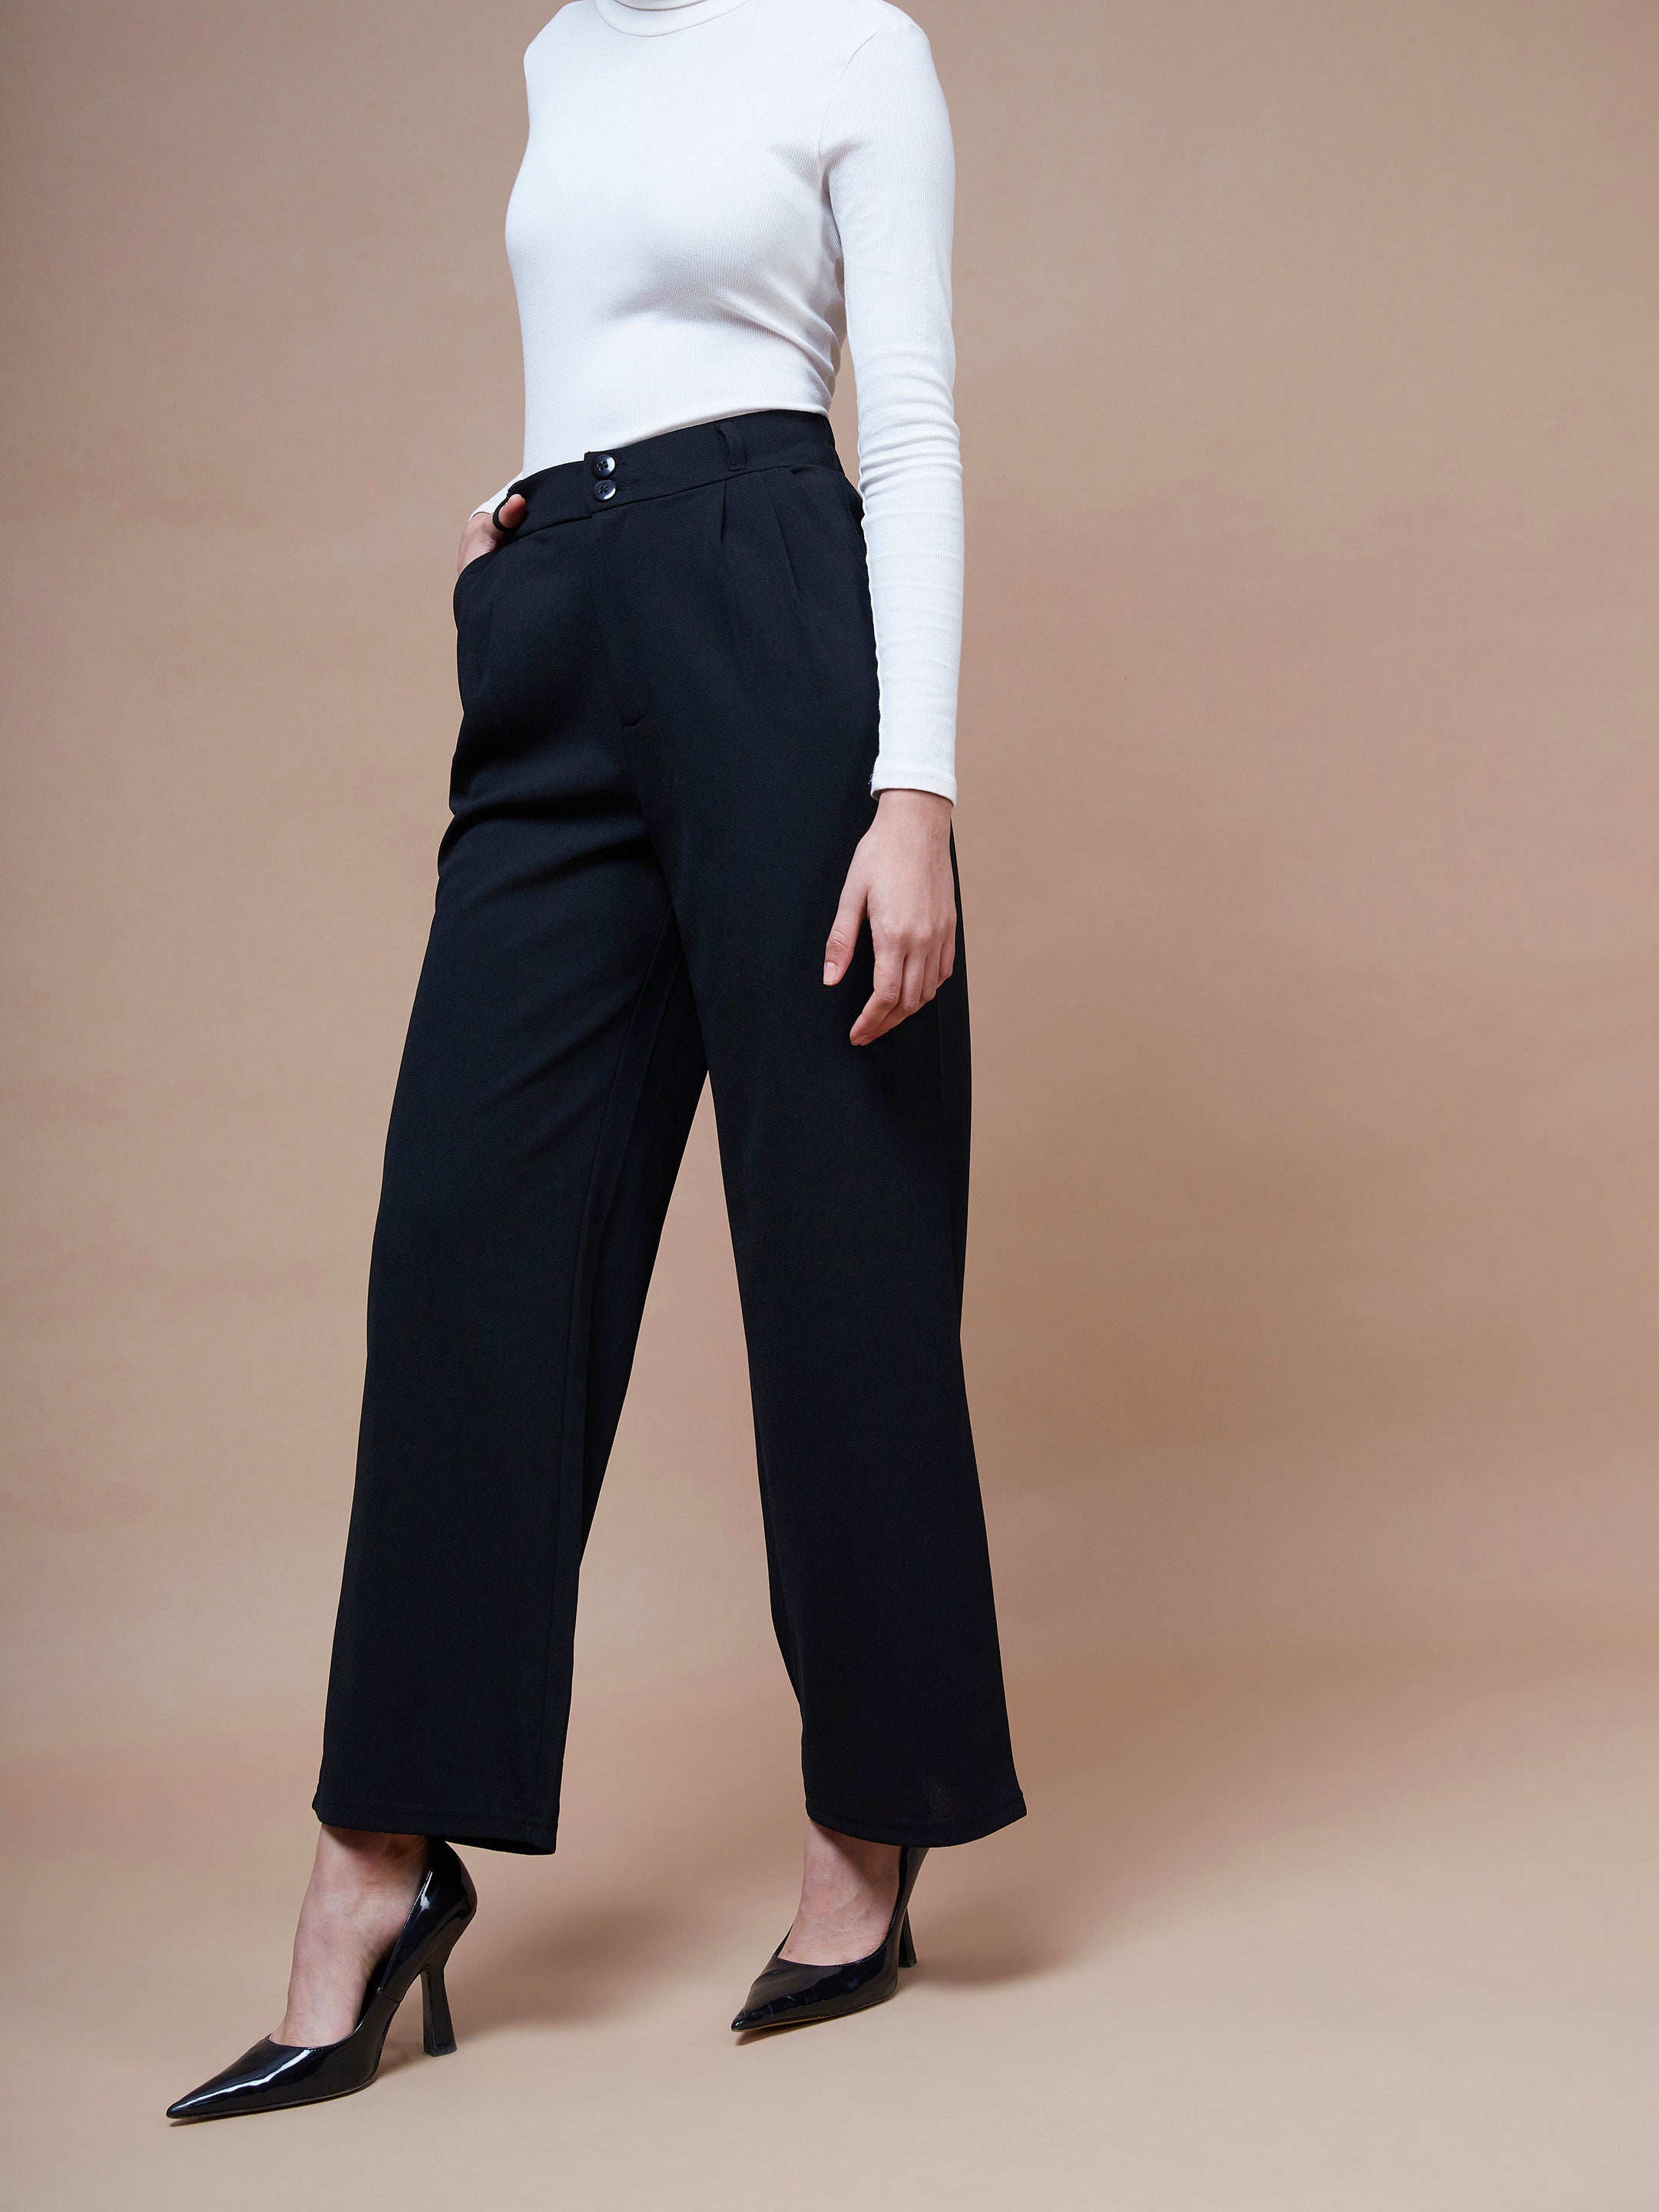 Women's Black Pleated Straight Stretchable Pants - SASSAFRAS